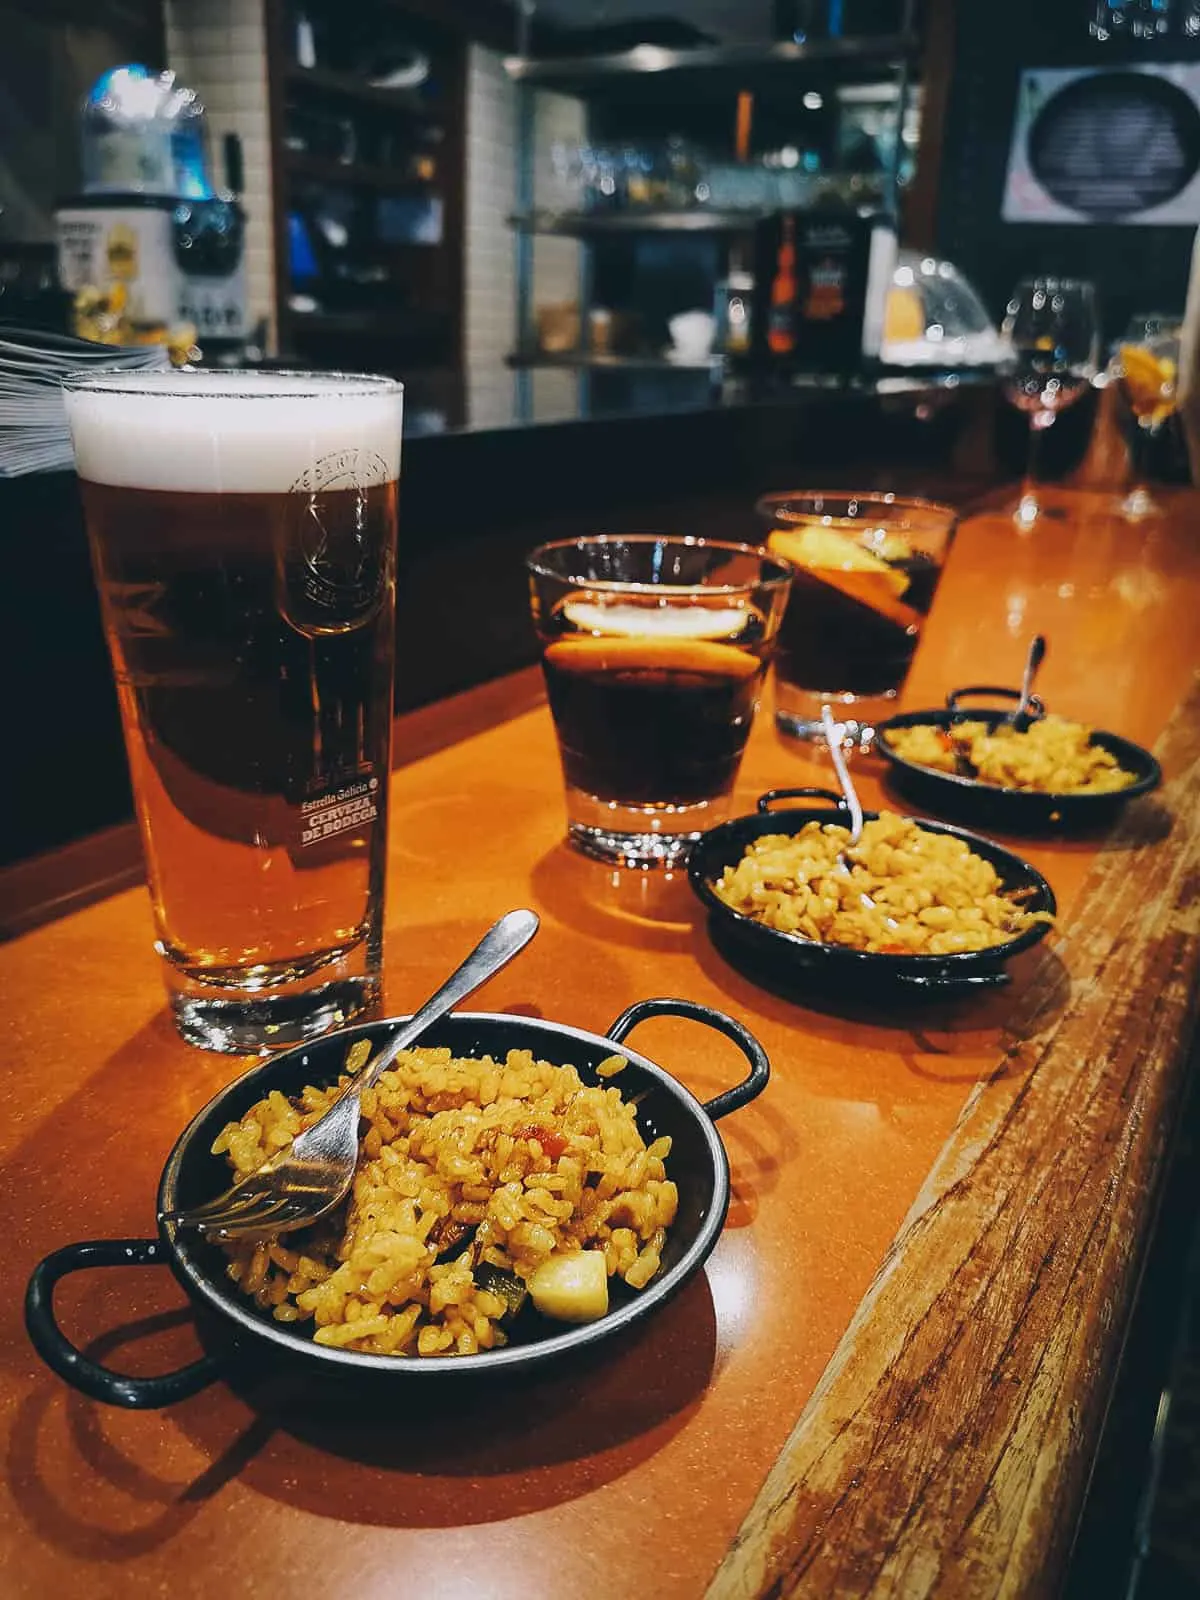 Beer and paella at La Genuina de Cimadevilla restaurant in Oviedo, Spain